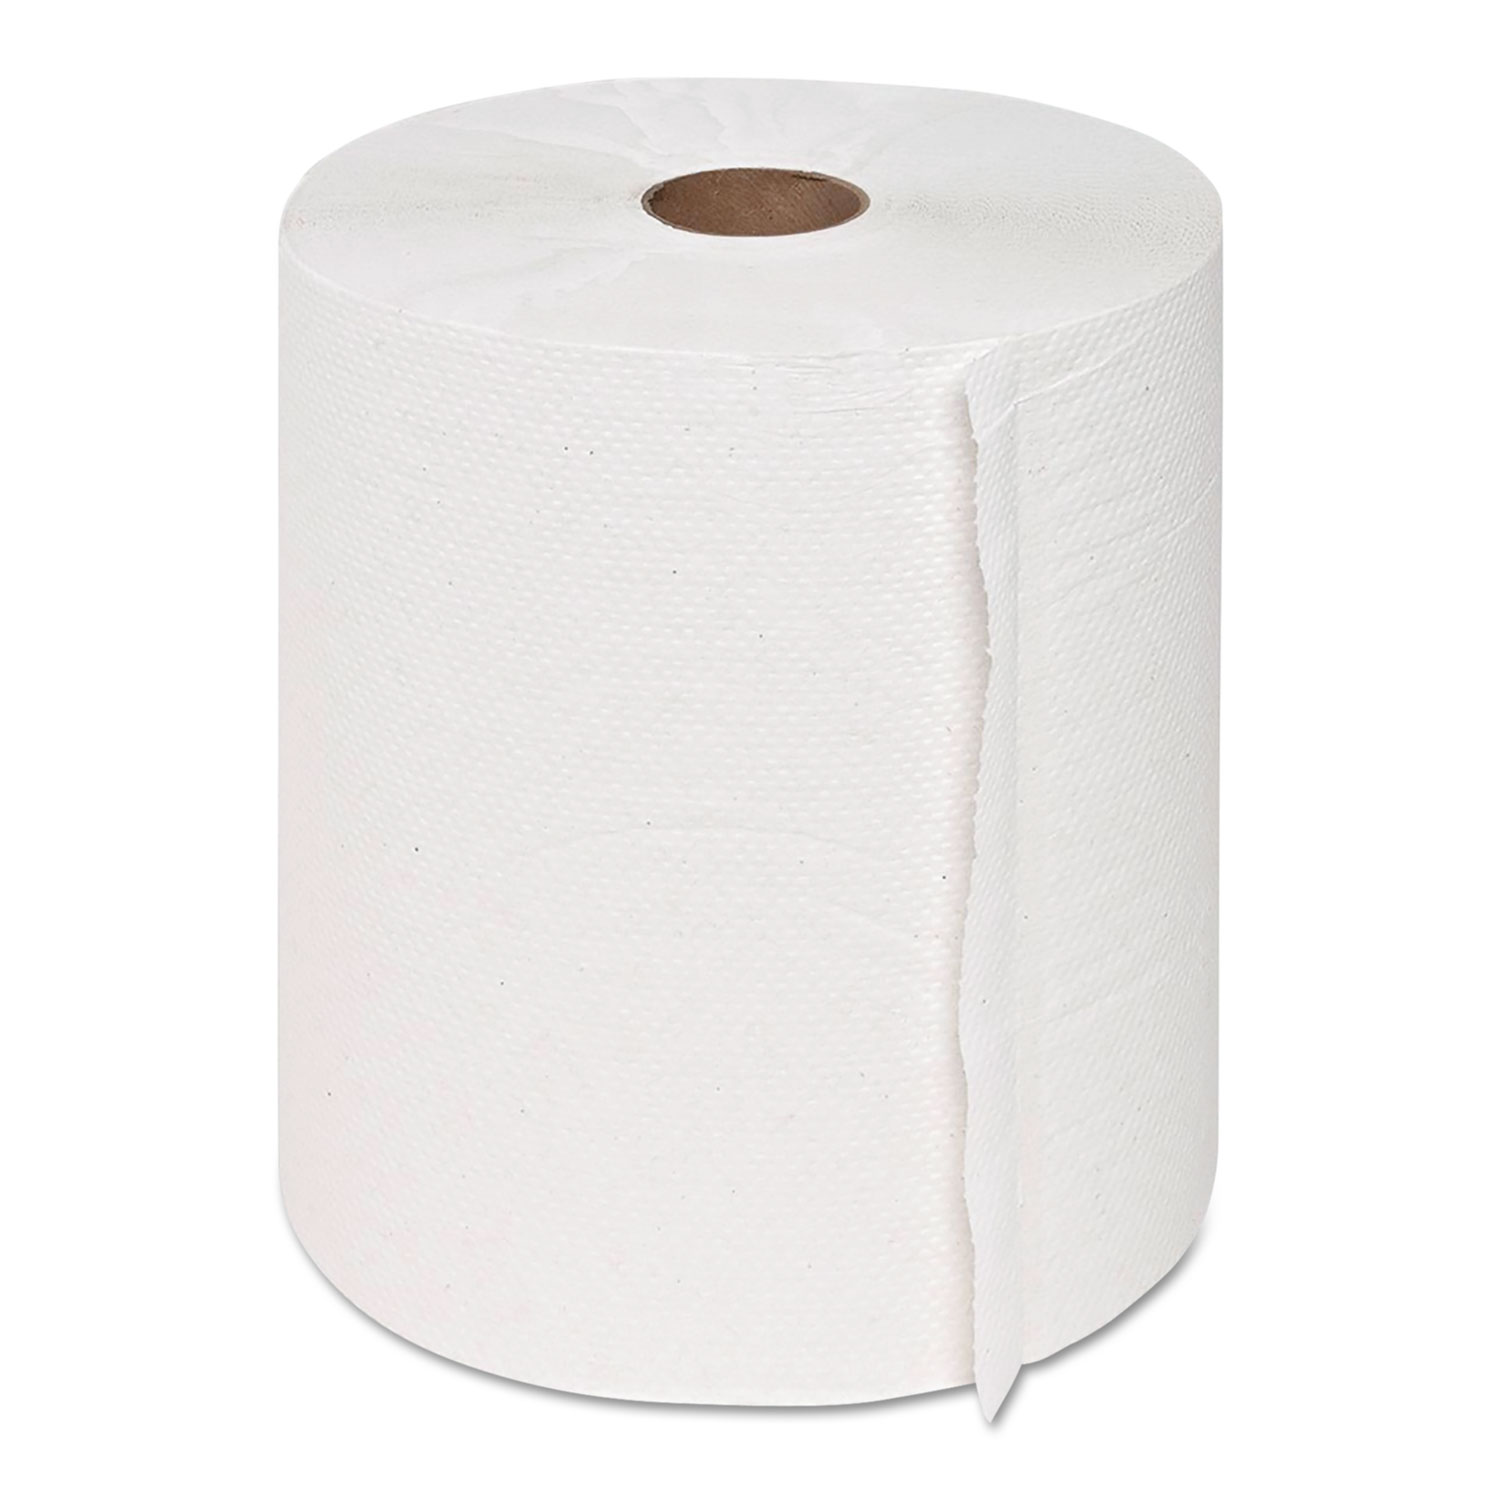  GEN GEN1910 Hardwound Roll Towels, 1-Ply, White, 8 x 350 ft, 12 Rolls/Carton (GEN1910) 